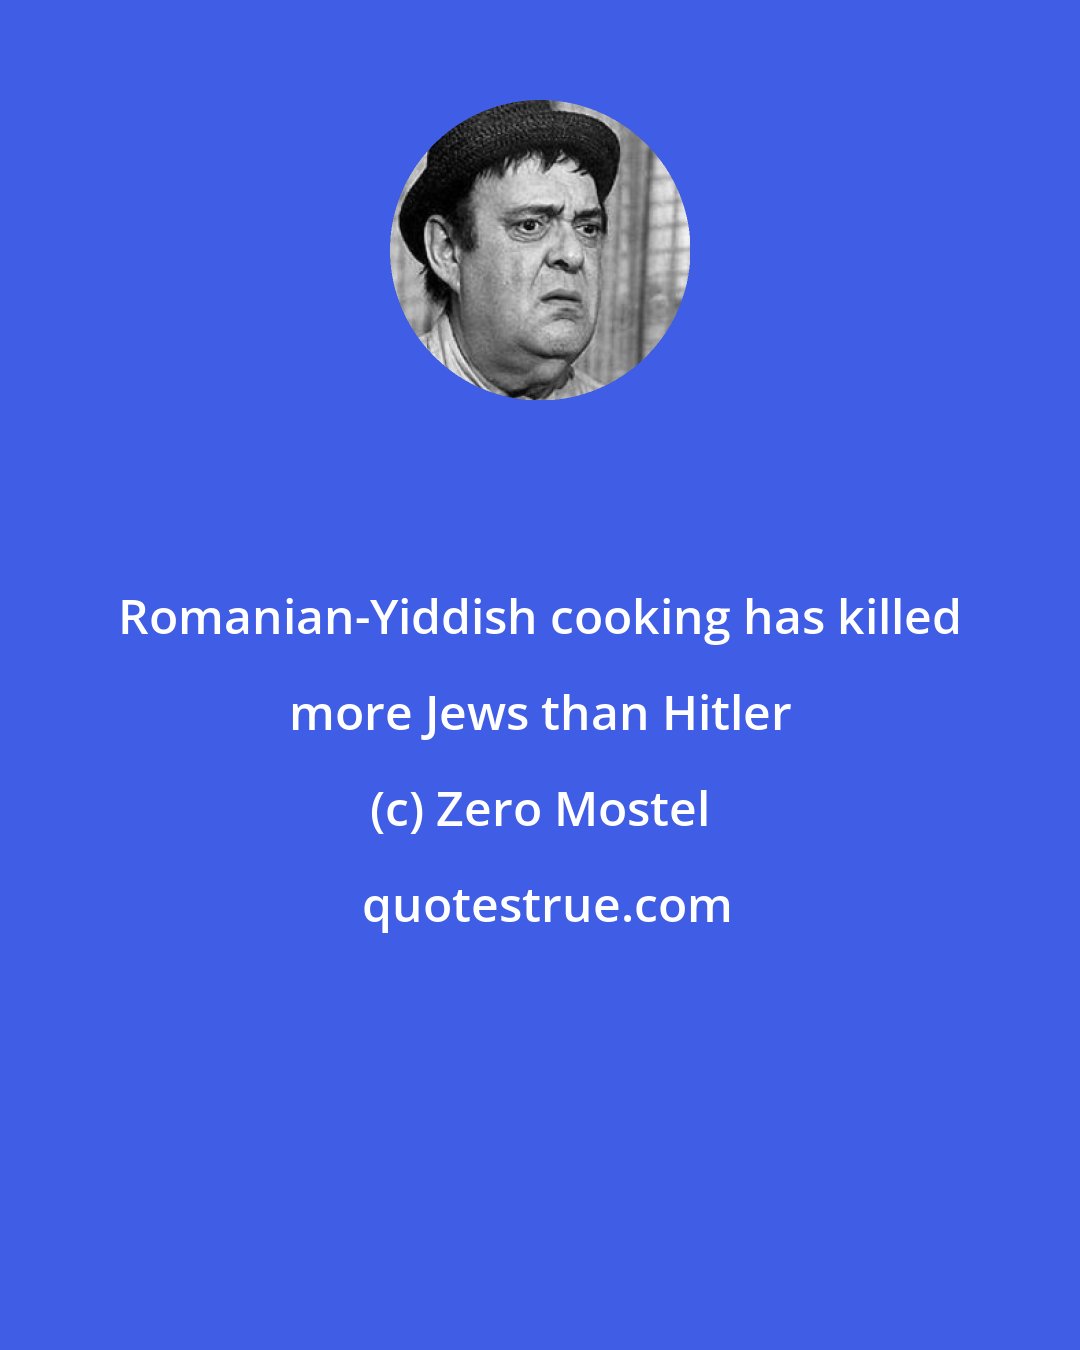 Zero Mostel: Romanian-Yiddish cooking has killed more Jews than Hitler